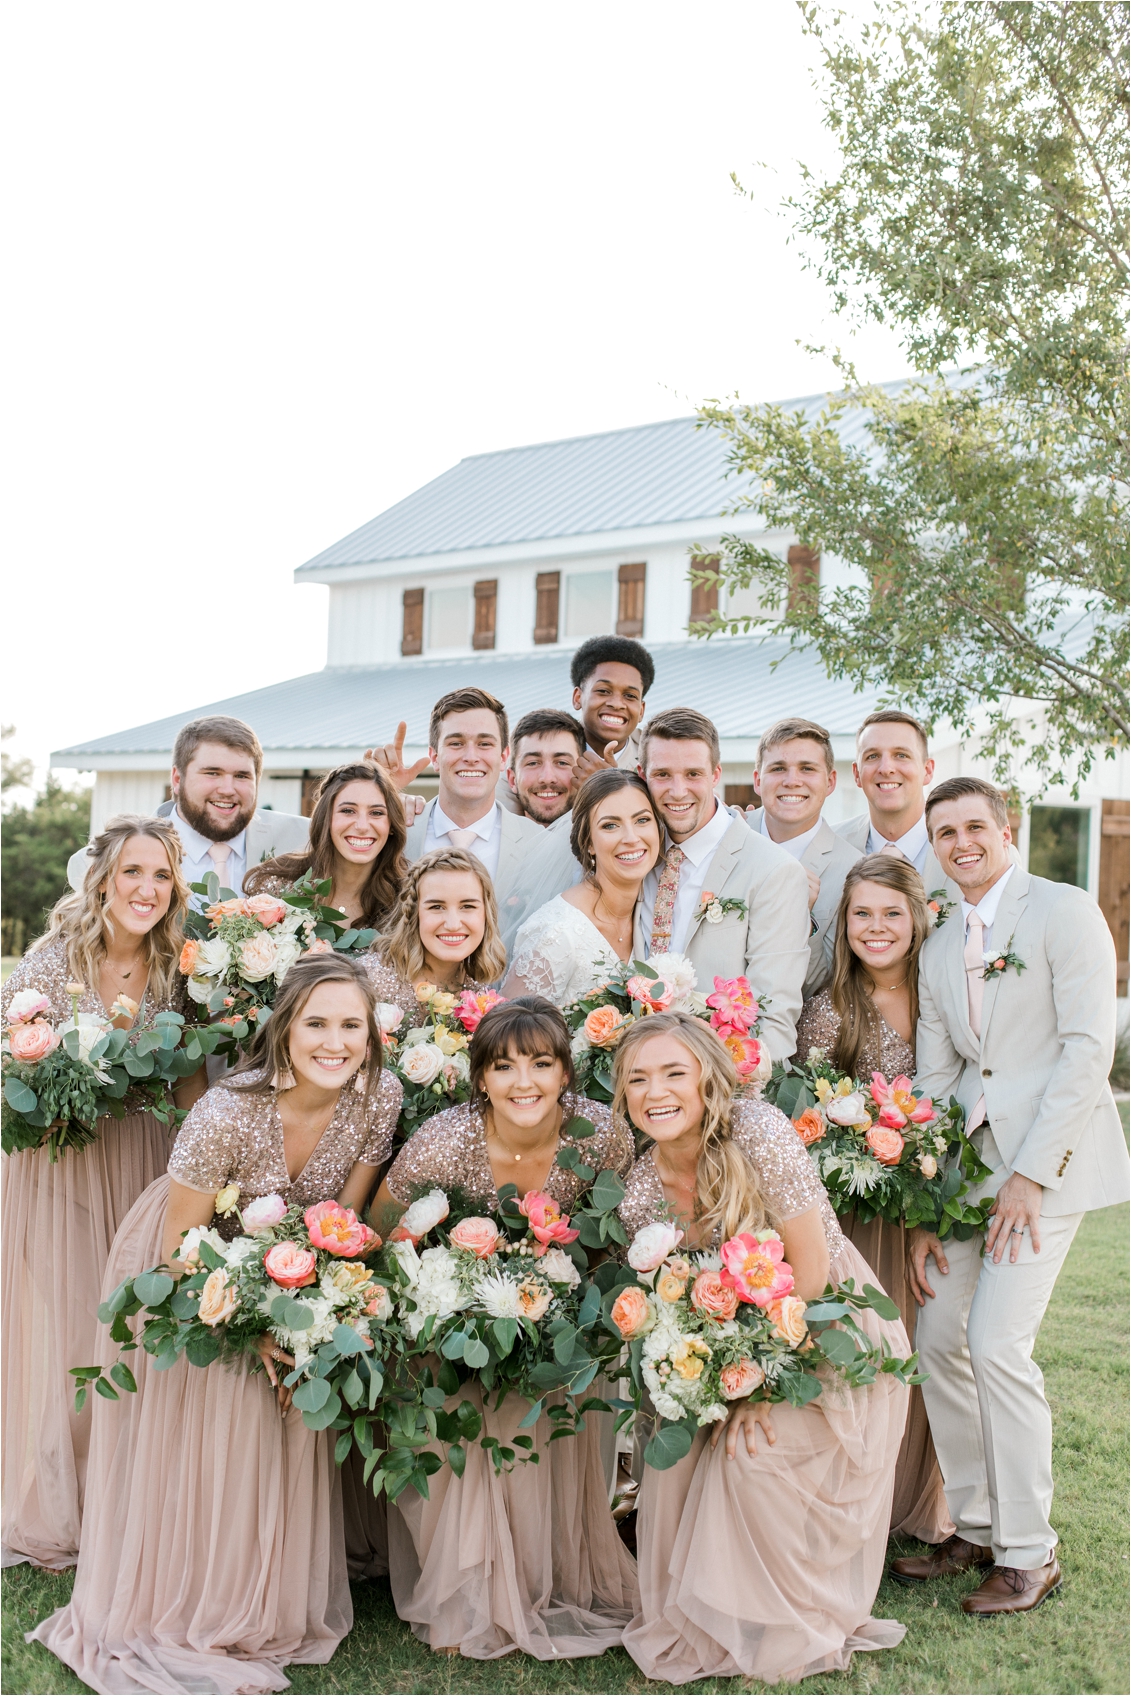 Five Oaks Farm Wedding in Cleburne, Texas by Gaby Caskey Photography, Texas Wedding Inspiration, white barn wedding inspiration, wedding party portraits